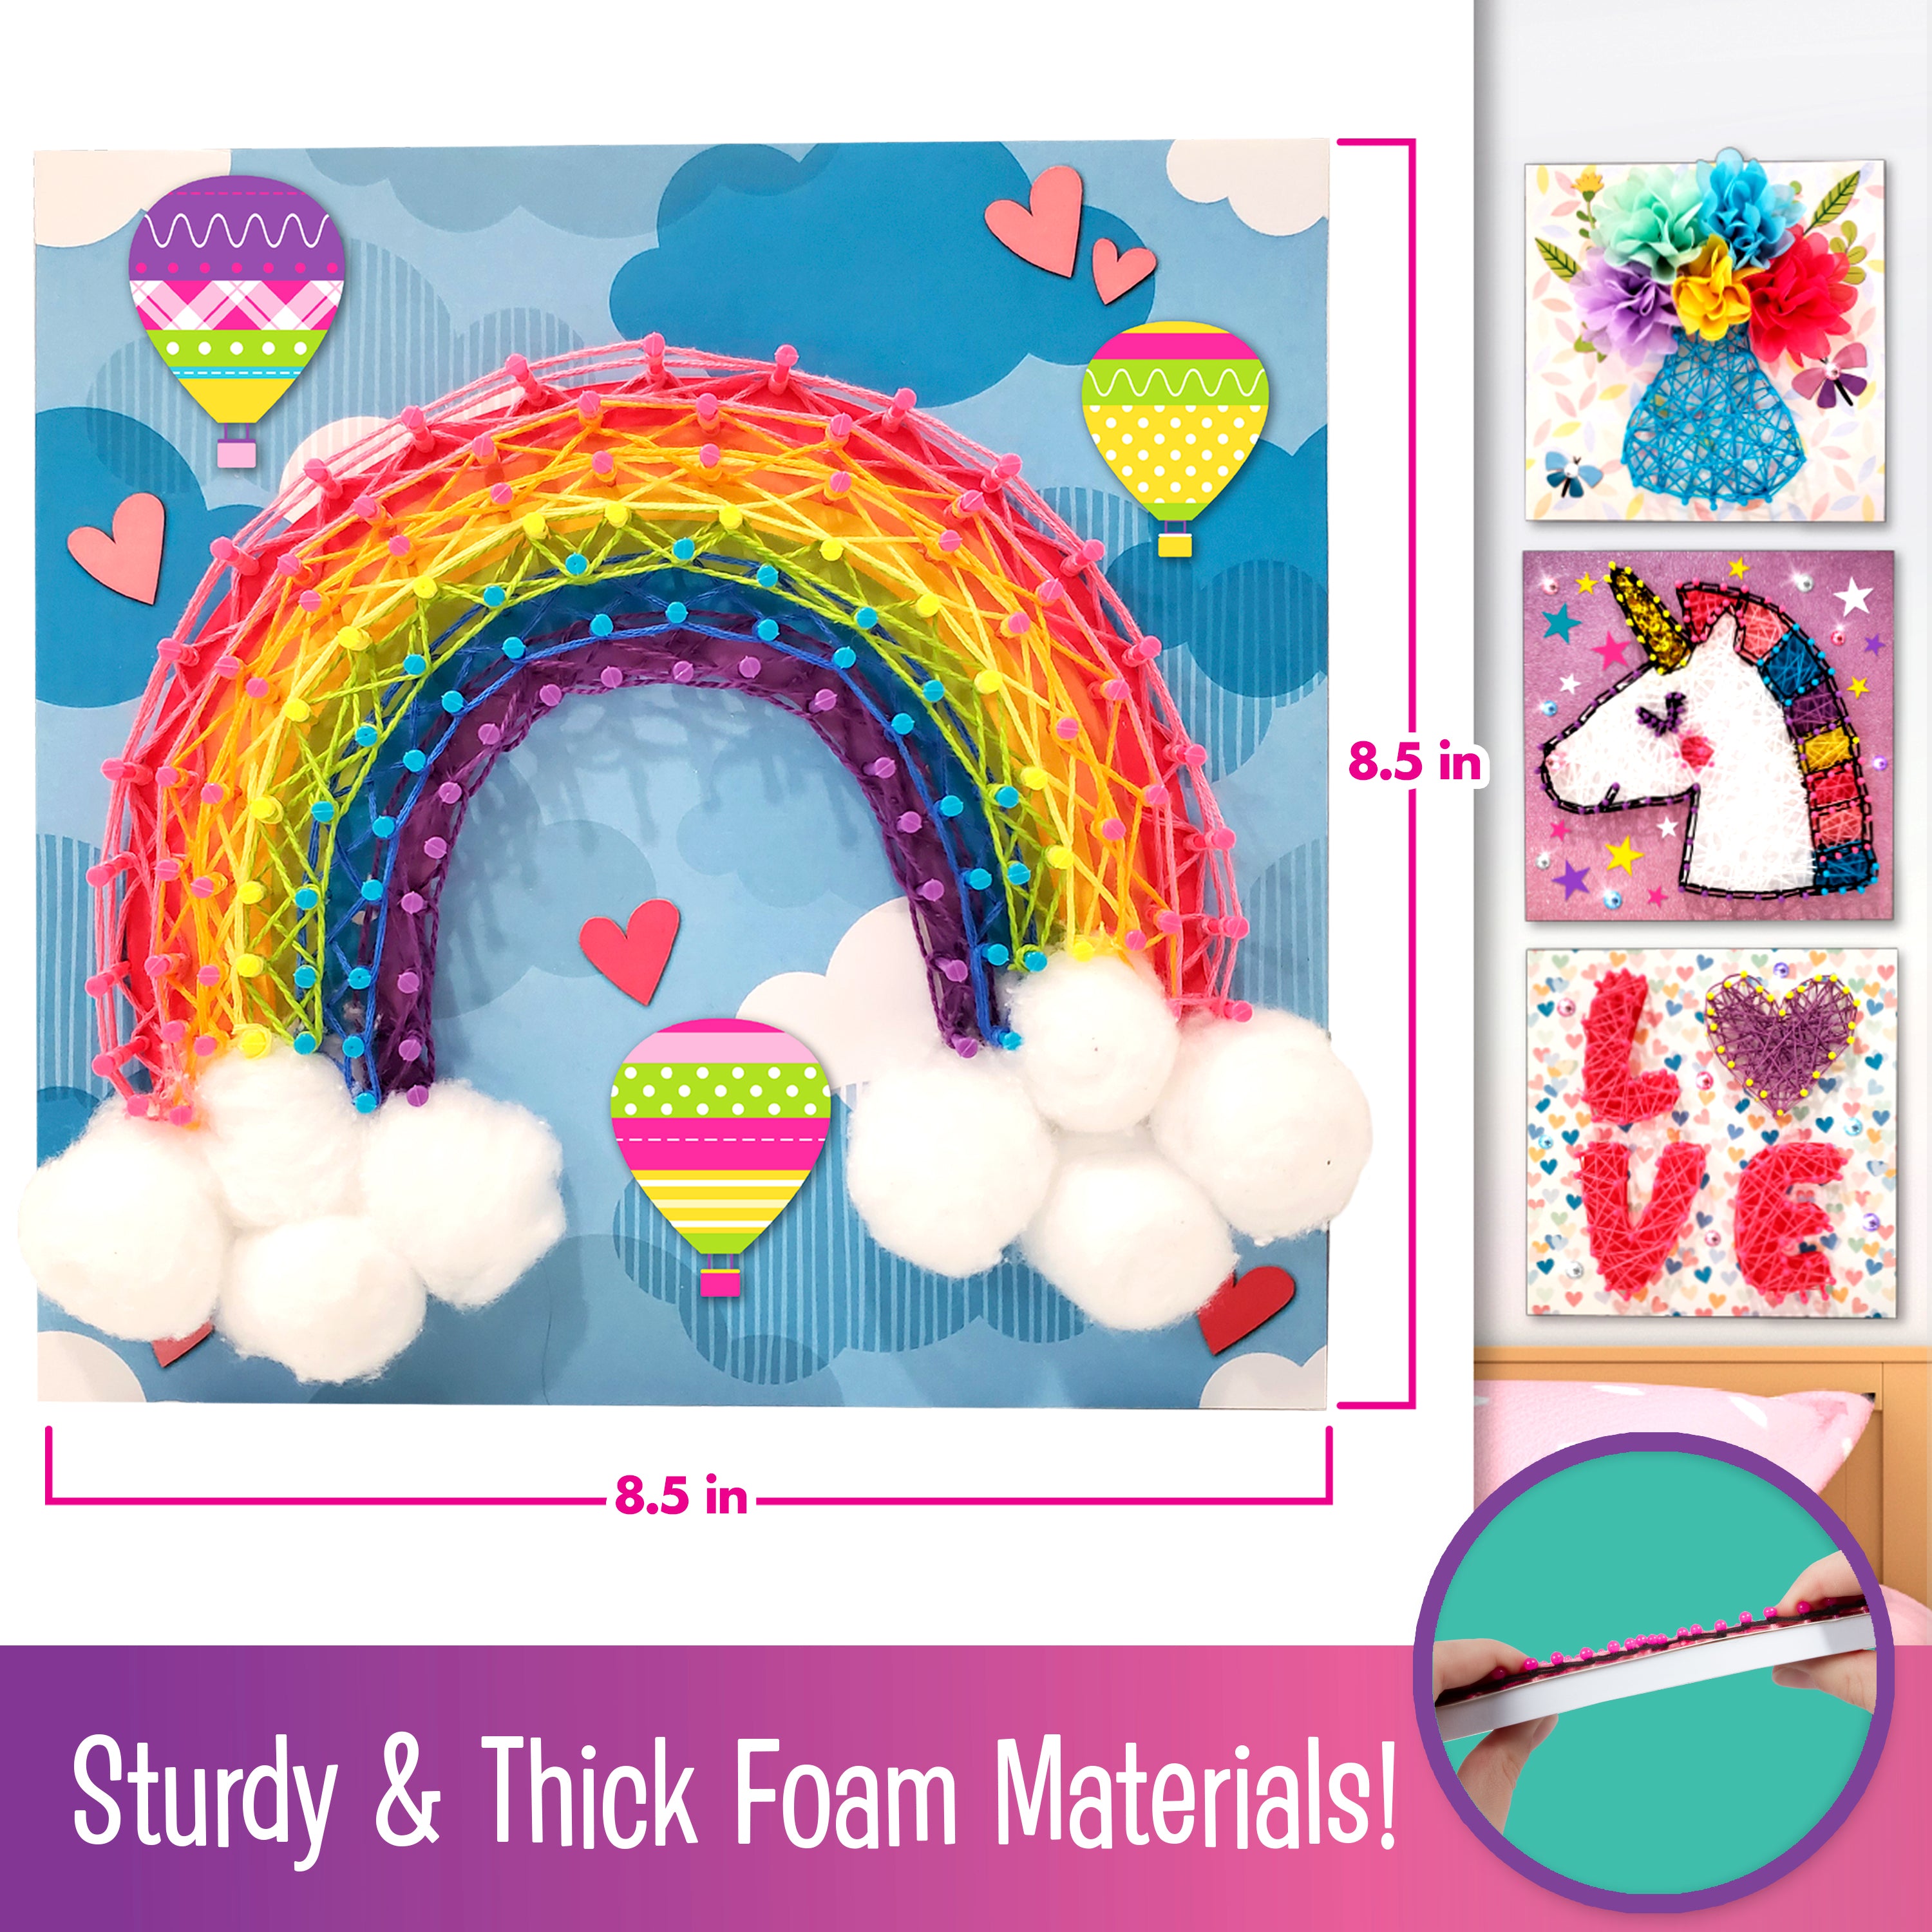 ArtCreativity Mini Art Sets for Kids - Pack of 12-23-Piece Kits with W · Art  Creativity